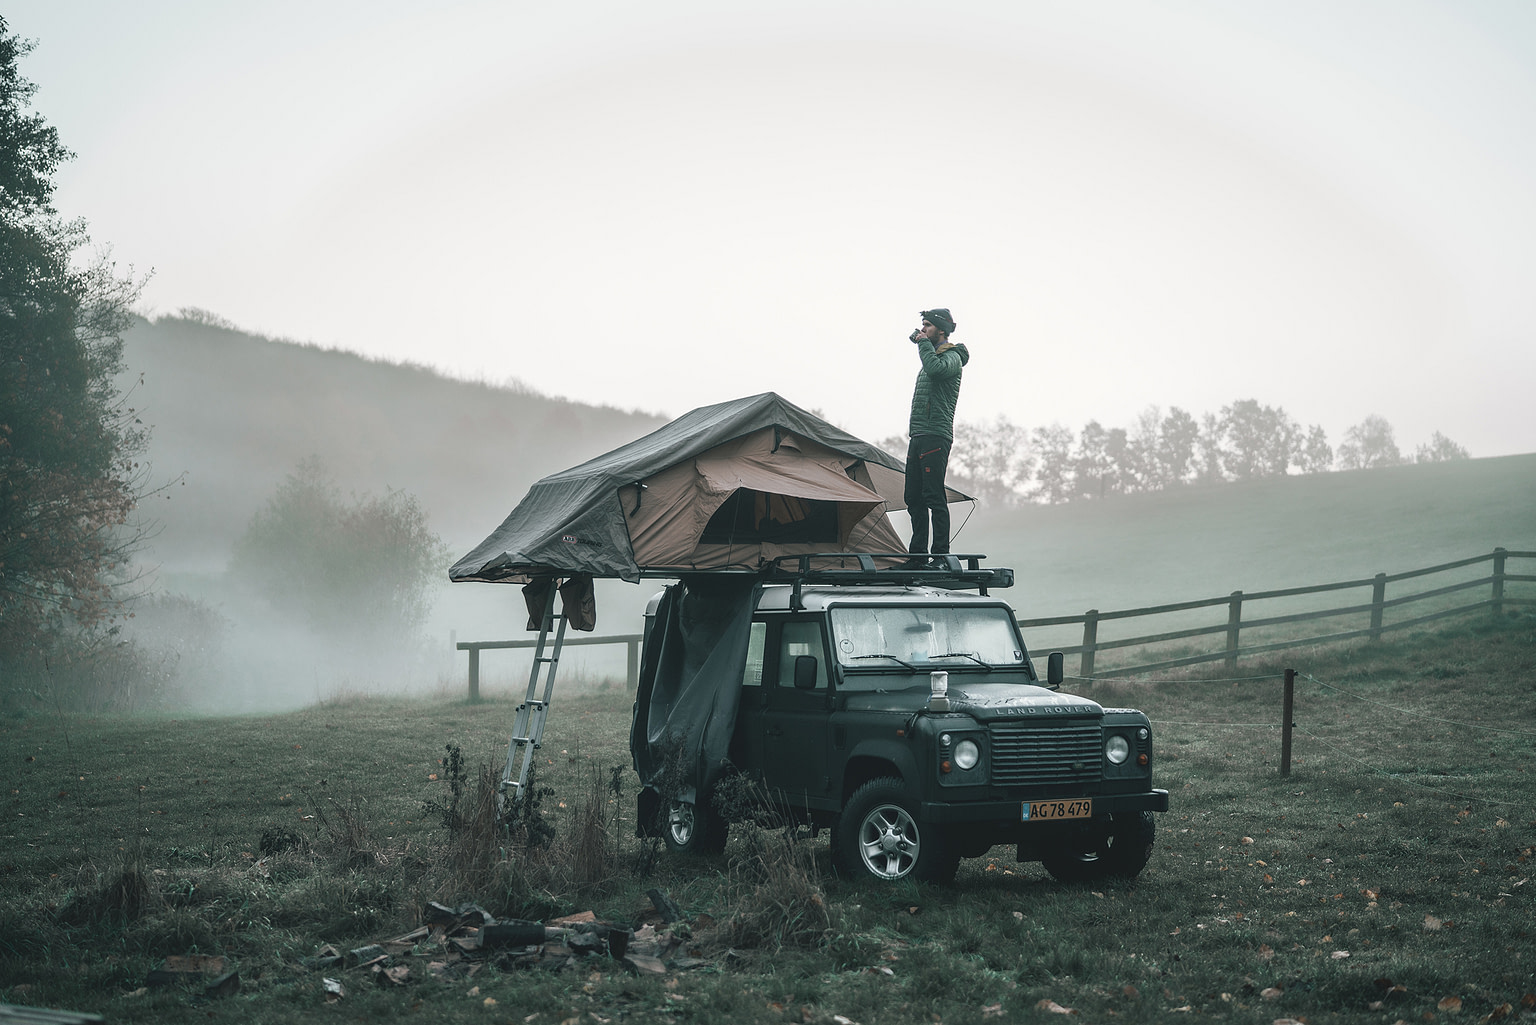 Land Rover Camp Mads Tolstrup